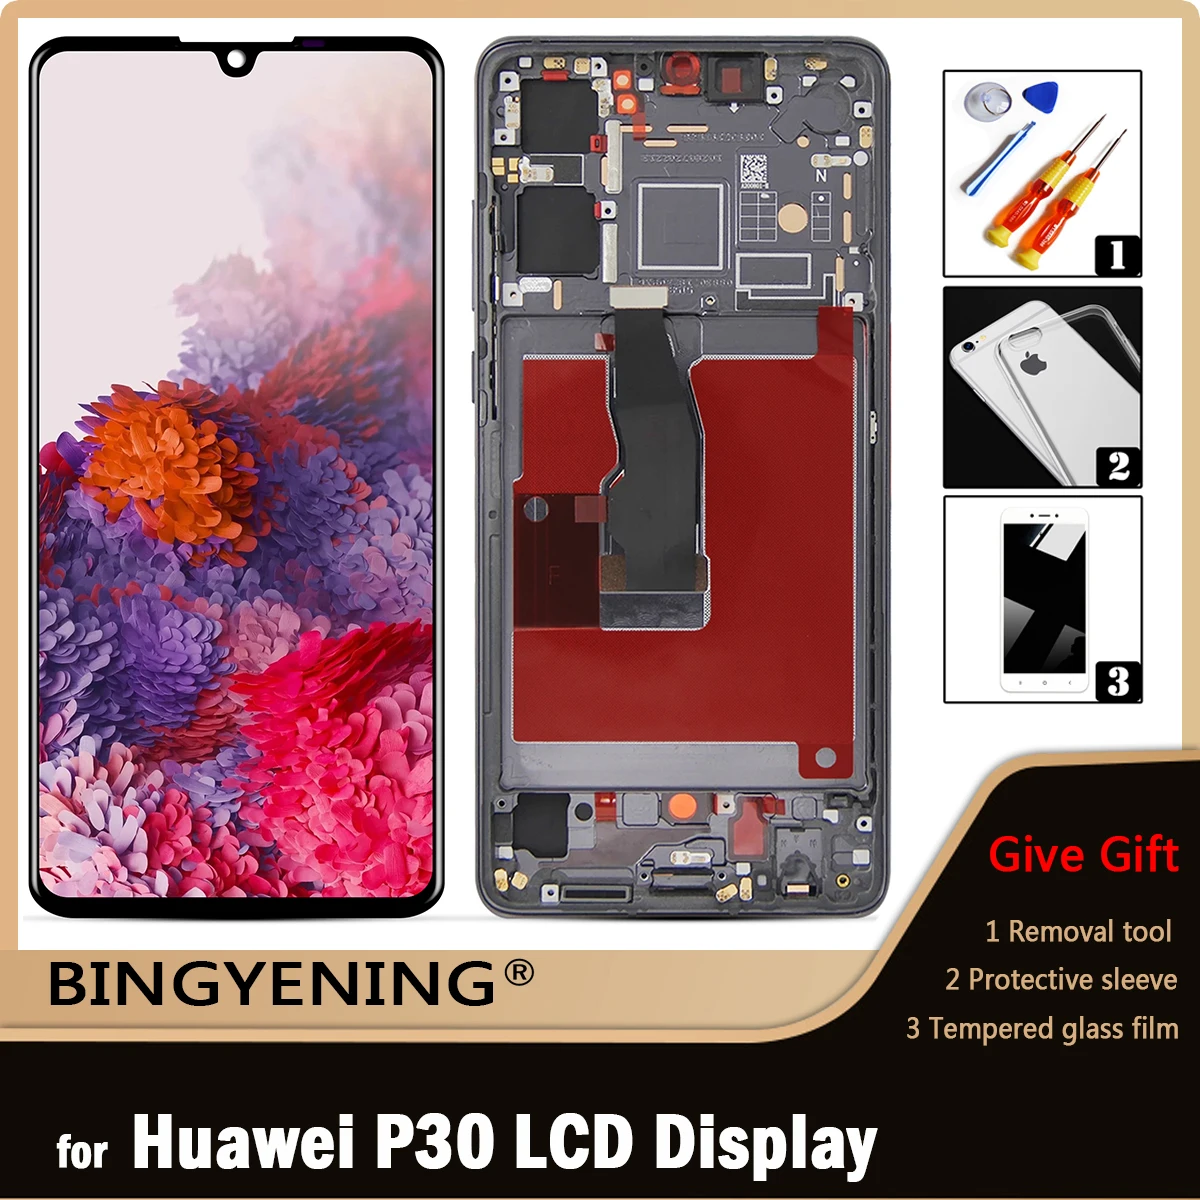 Super AMOLED Для HUAWEI P30 ЖК-дисплей ELE-L29 ELE-L09 ELE-AL00 Дисплей Сенсорный Экран Дигитайзер Запасные Части Для Huawei P30 Экран